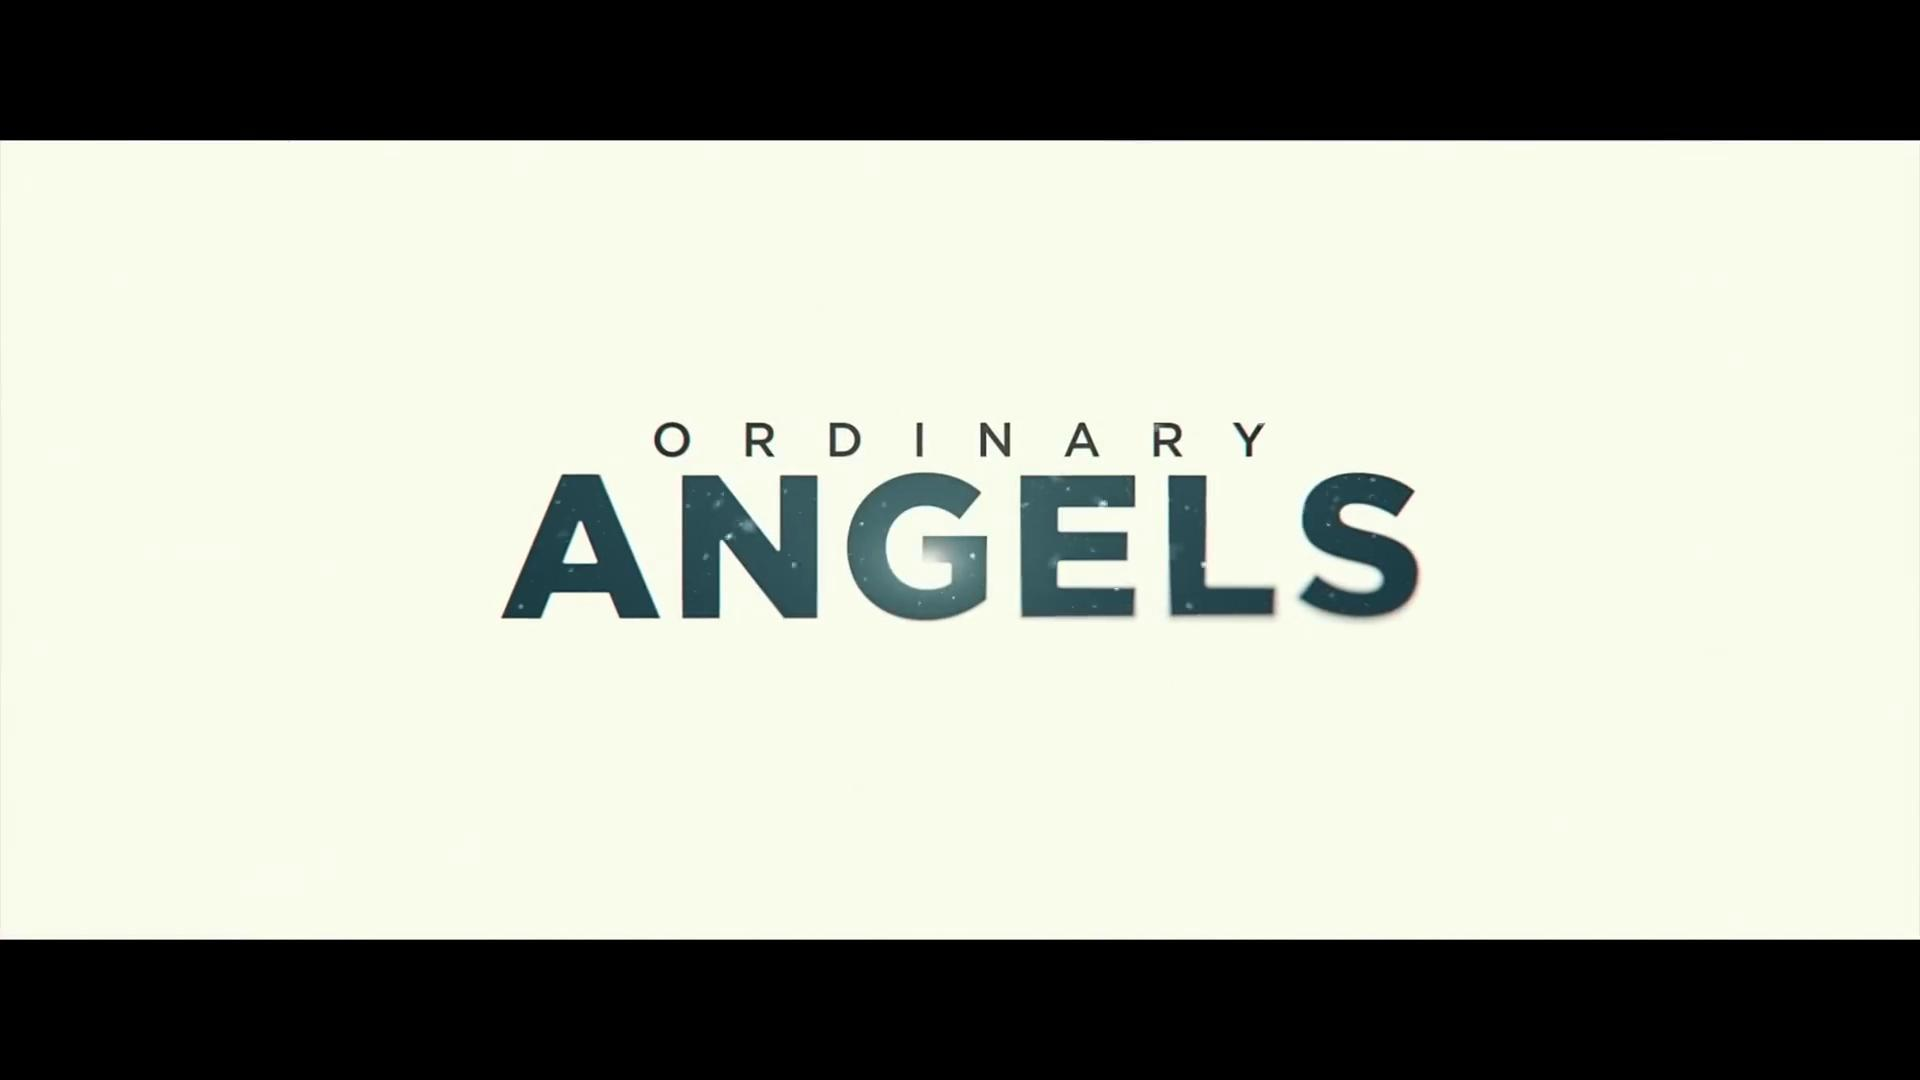 Ordinary angels